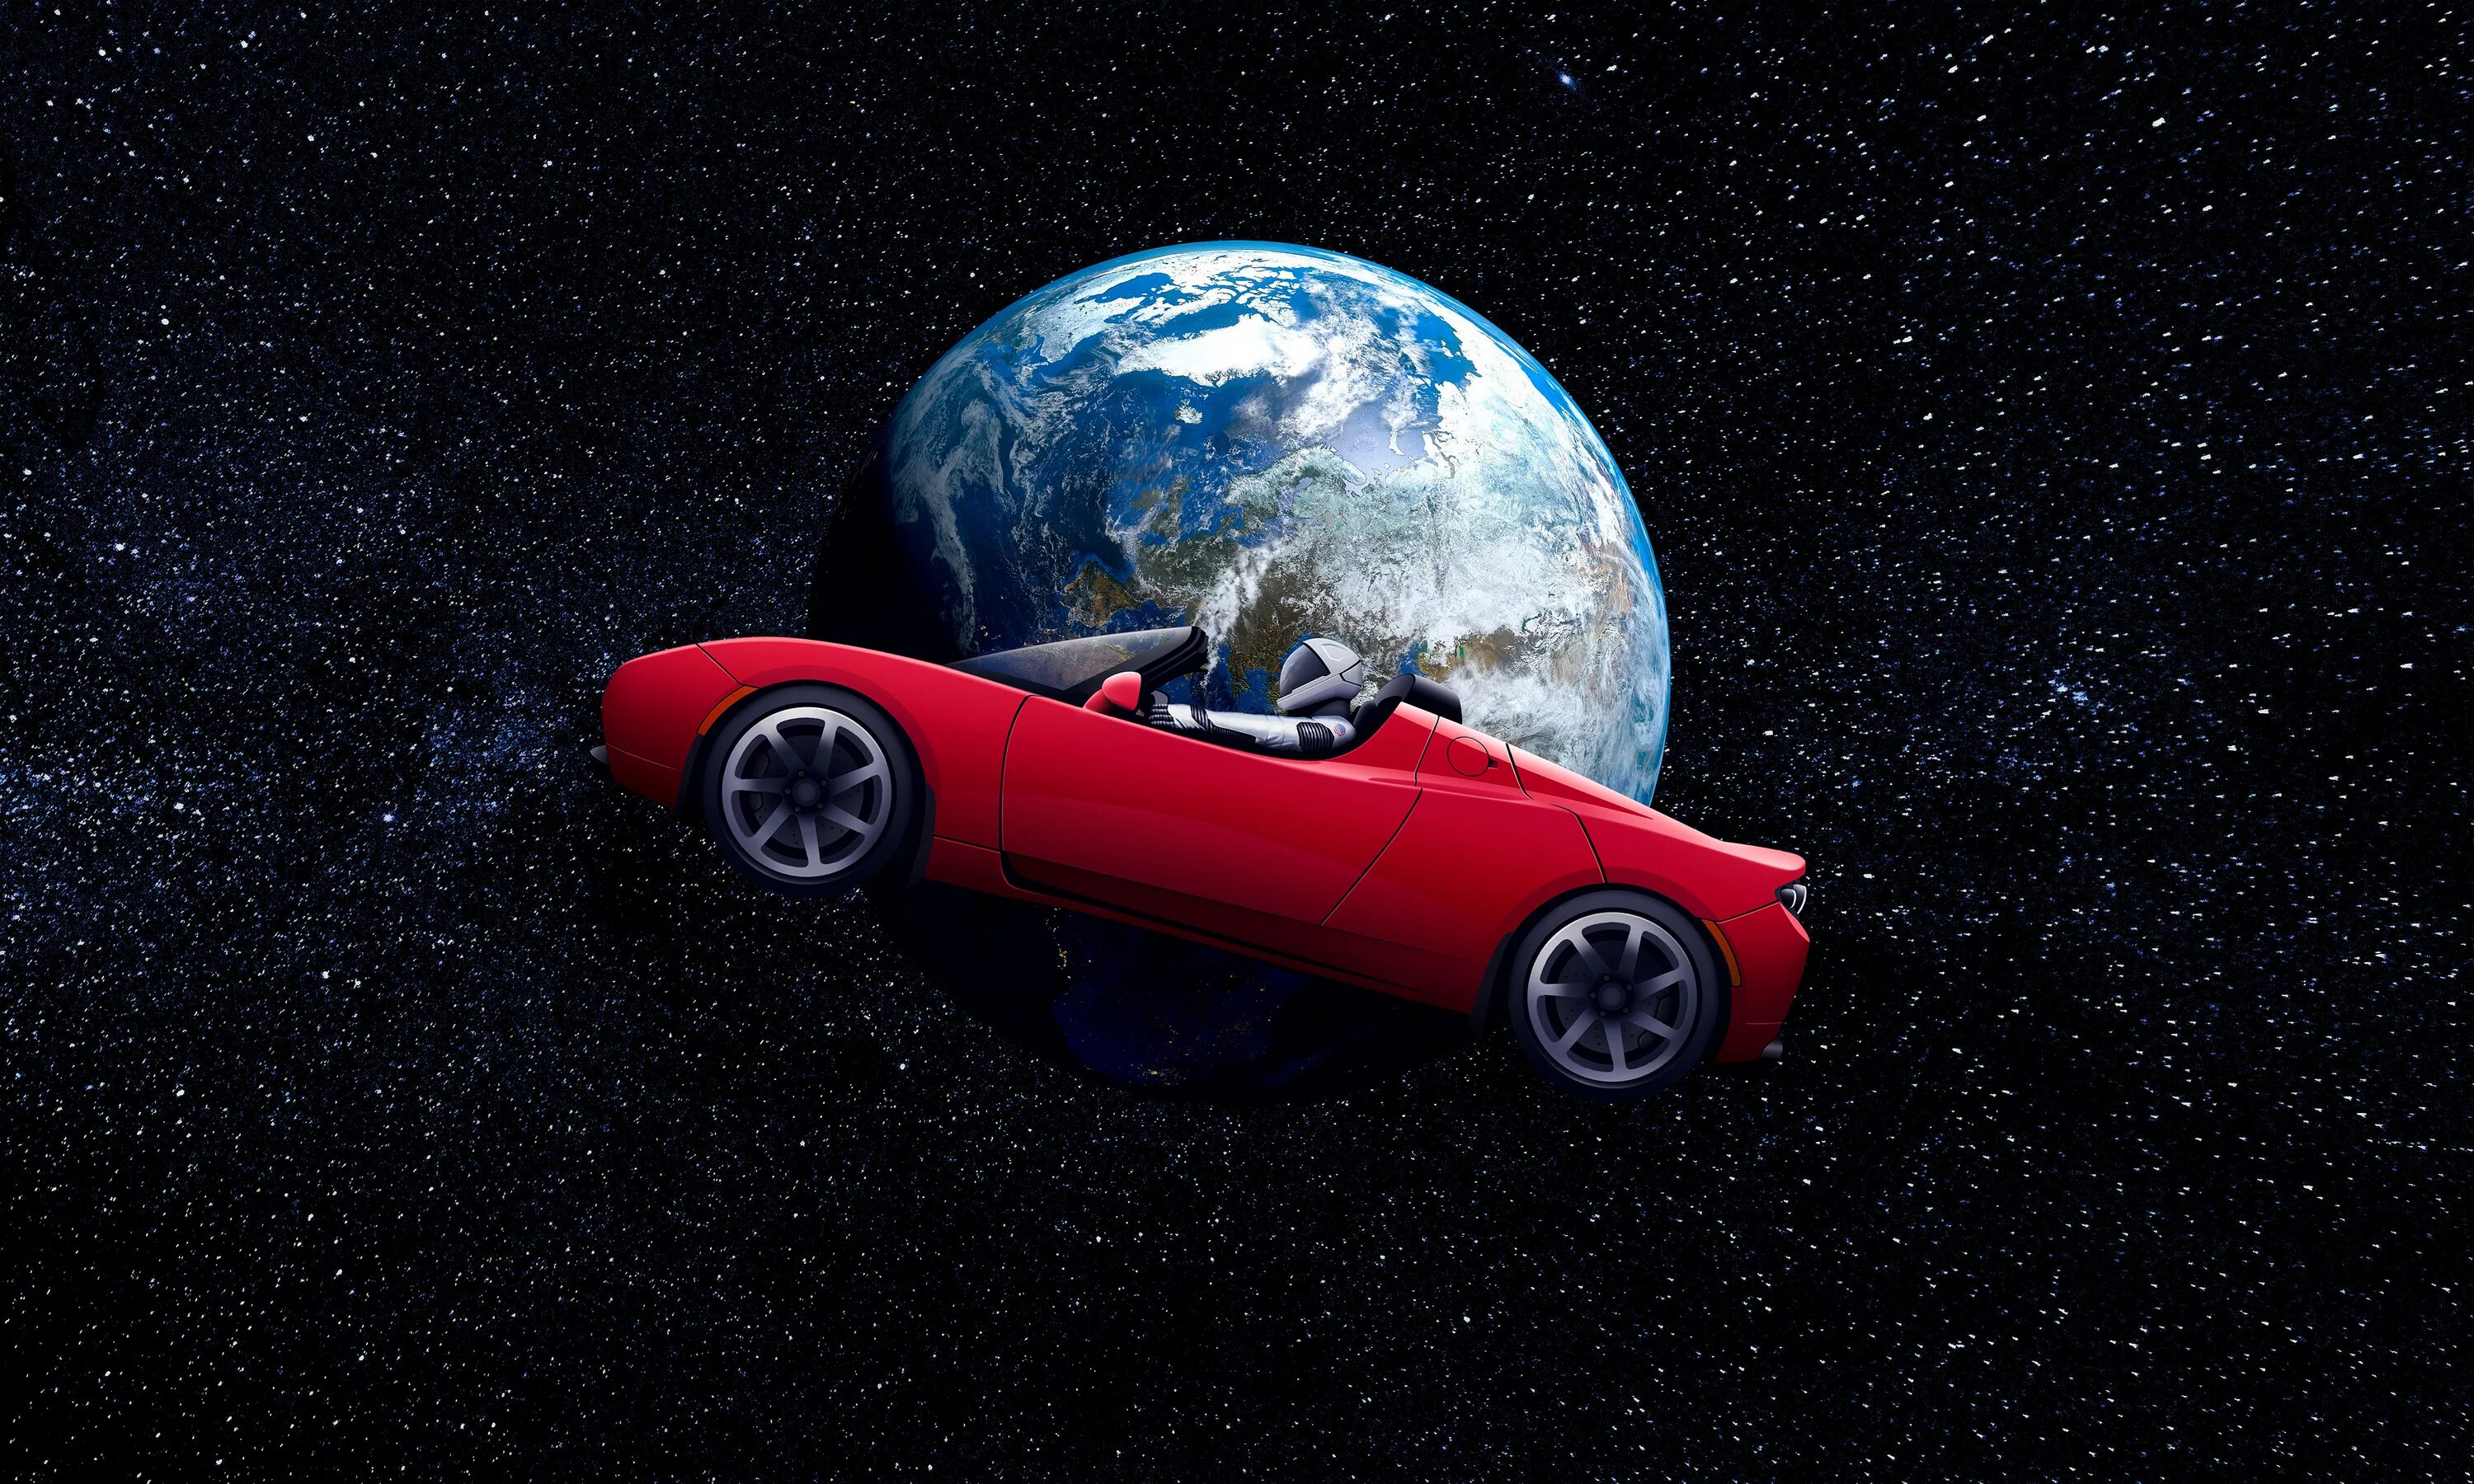 Tesla Roadster 2. Tesla Roadster Илон Маск. Space car